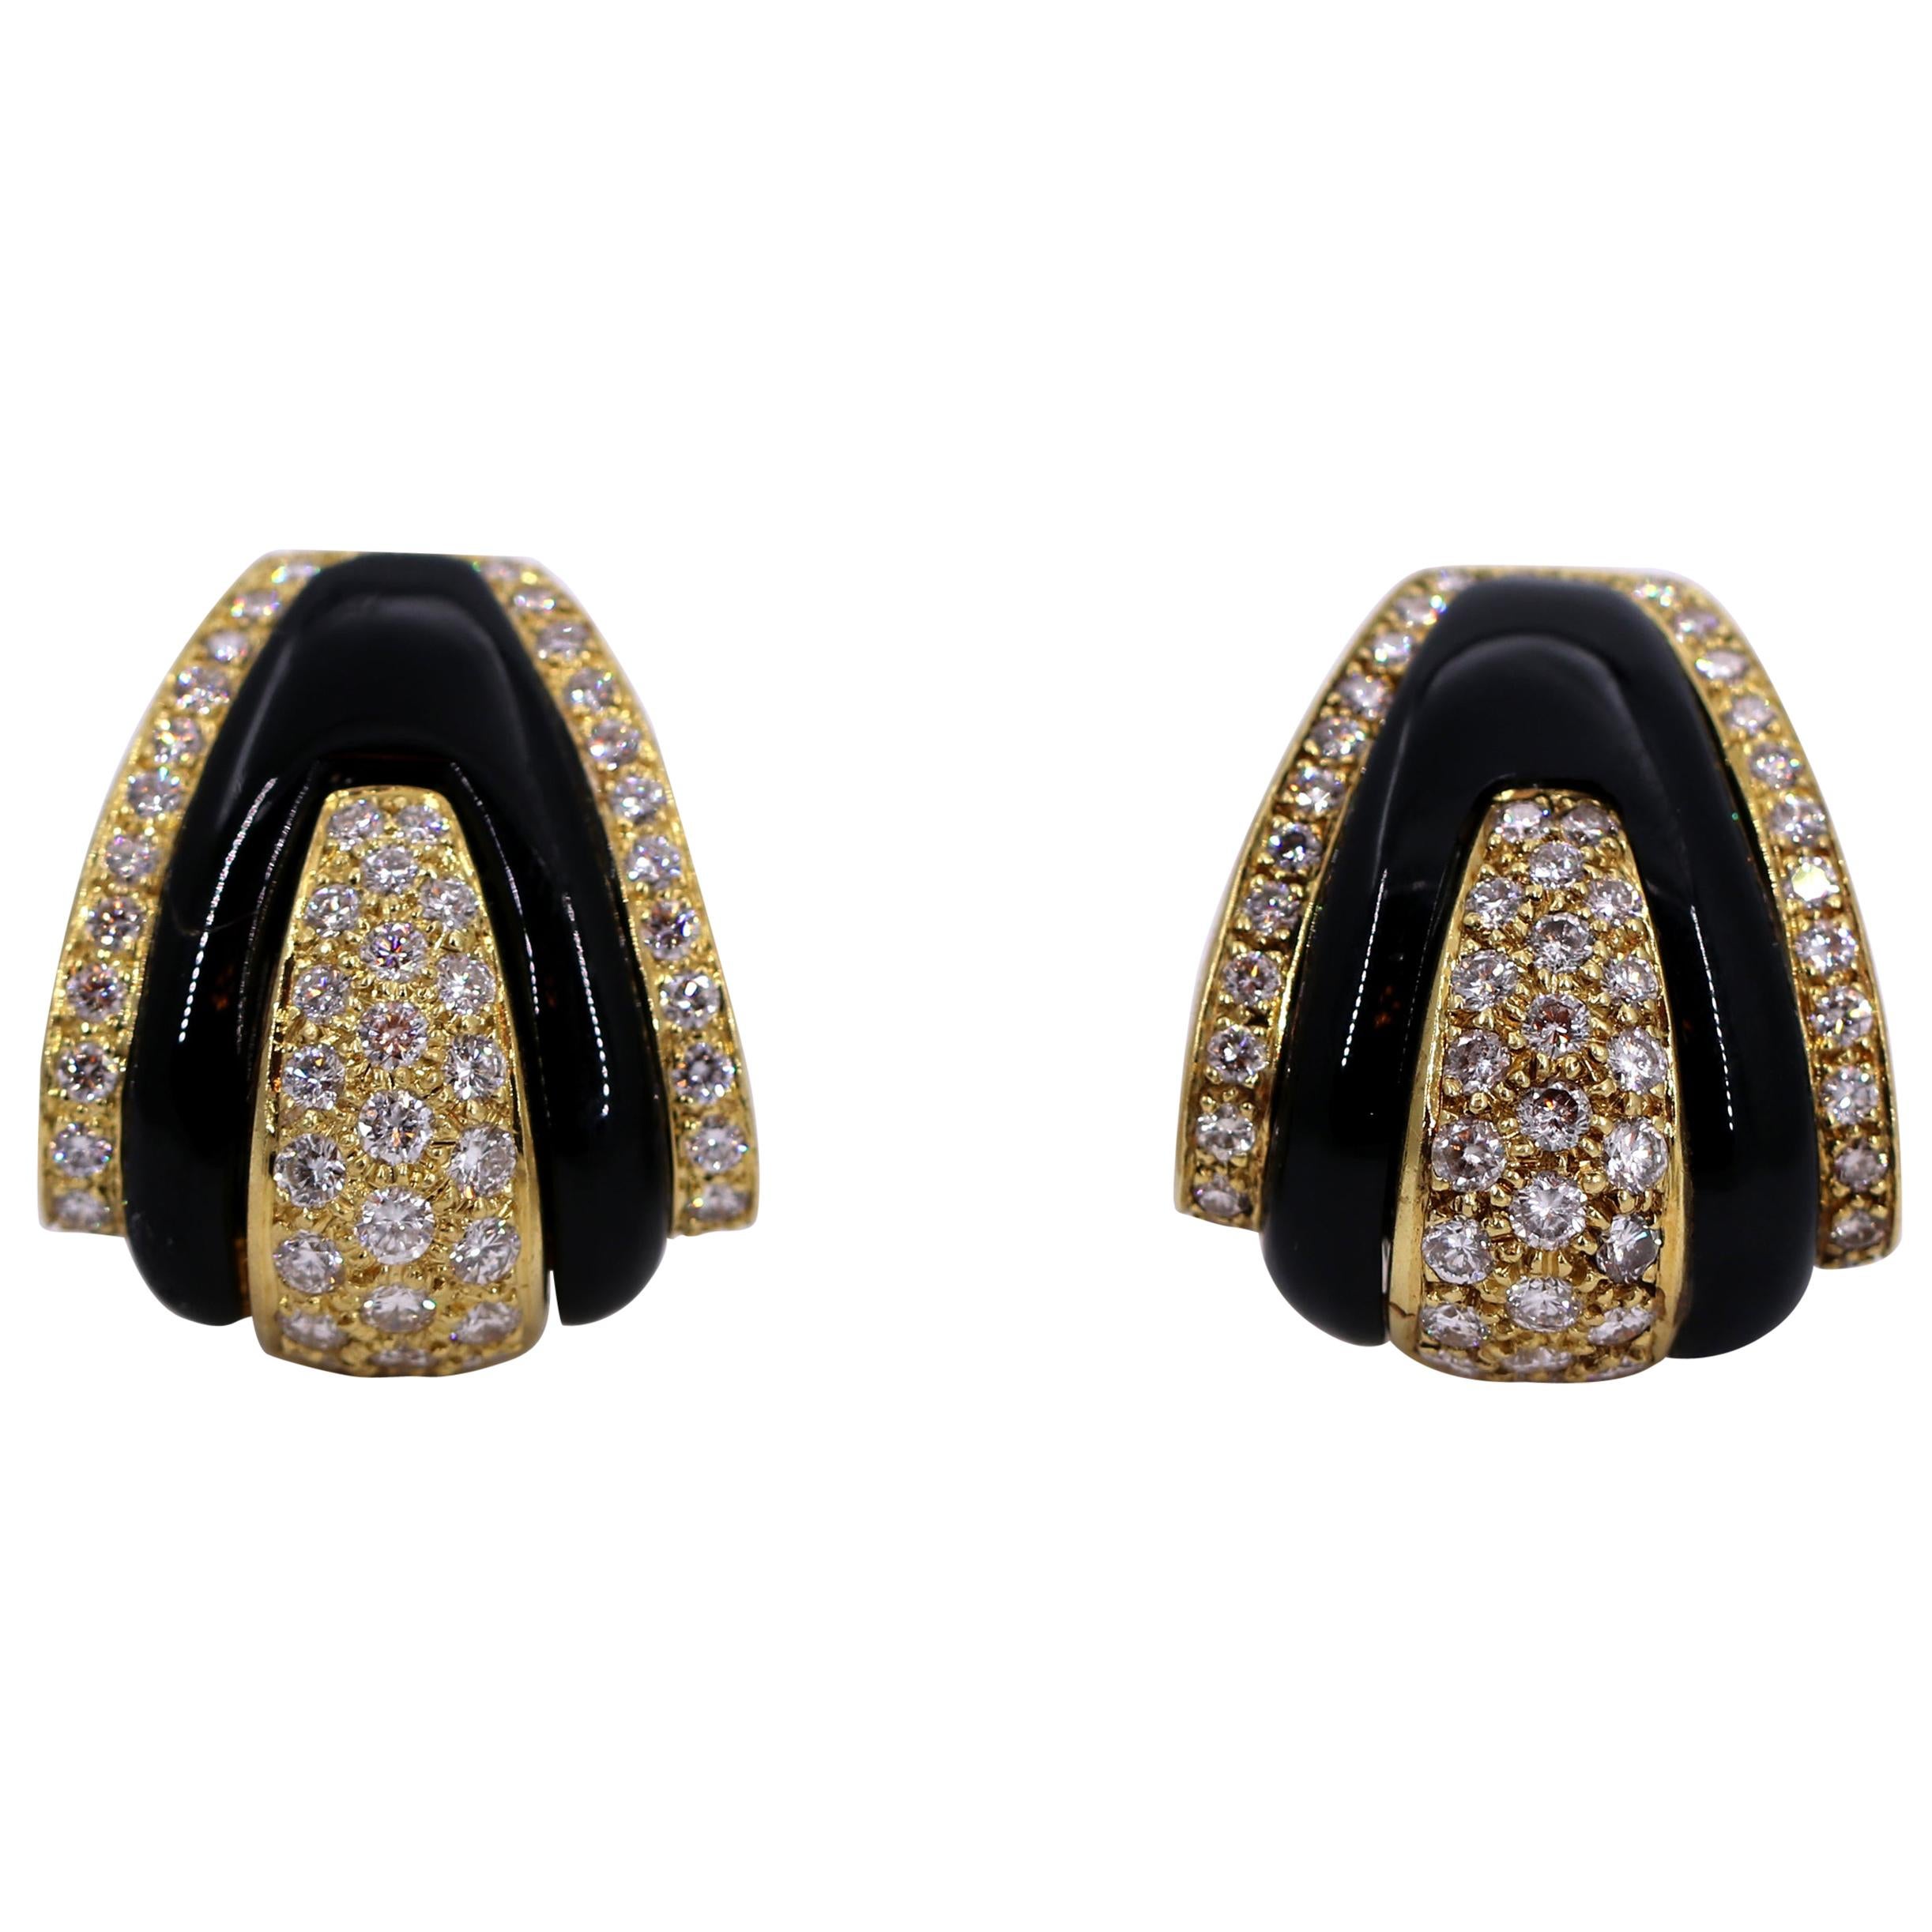 1970s Gold Diamond and Onyx Earrings